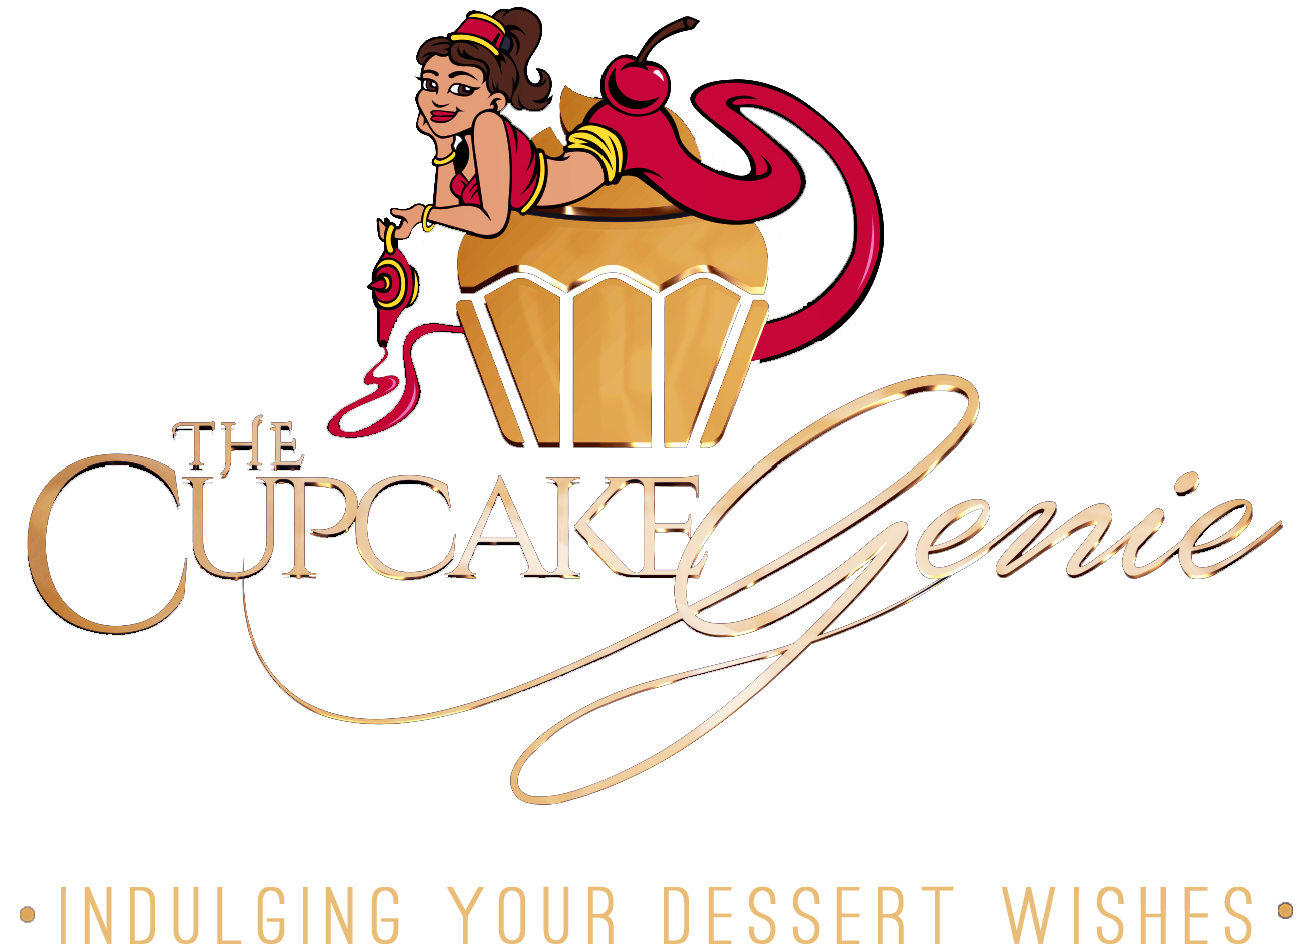 The Cupcake Genie